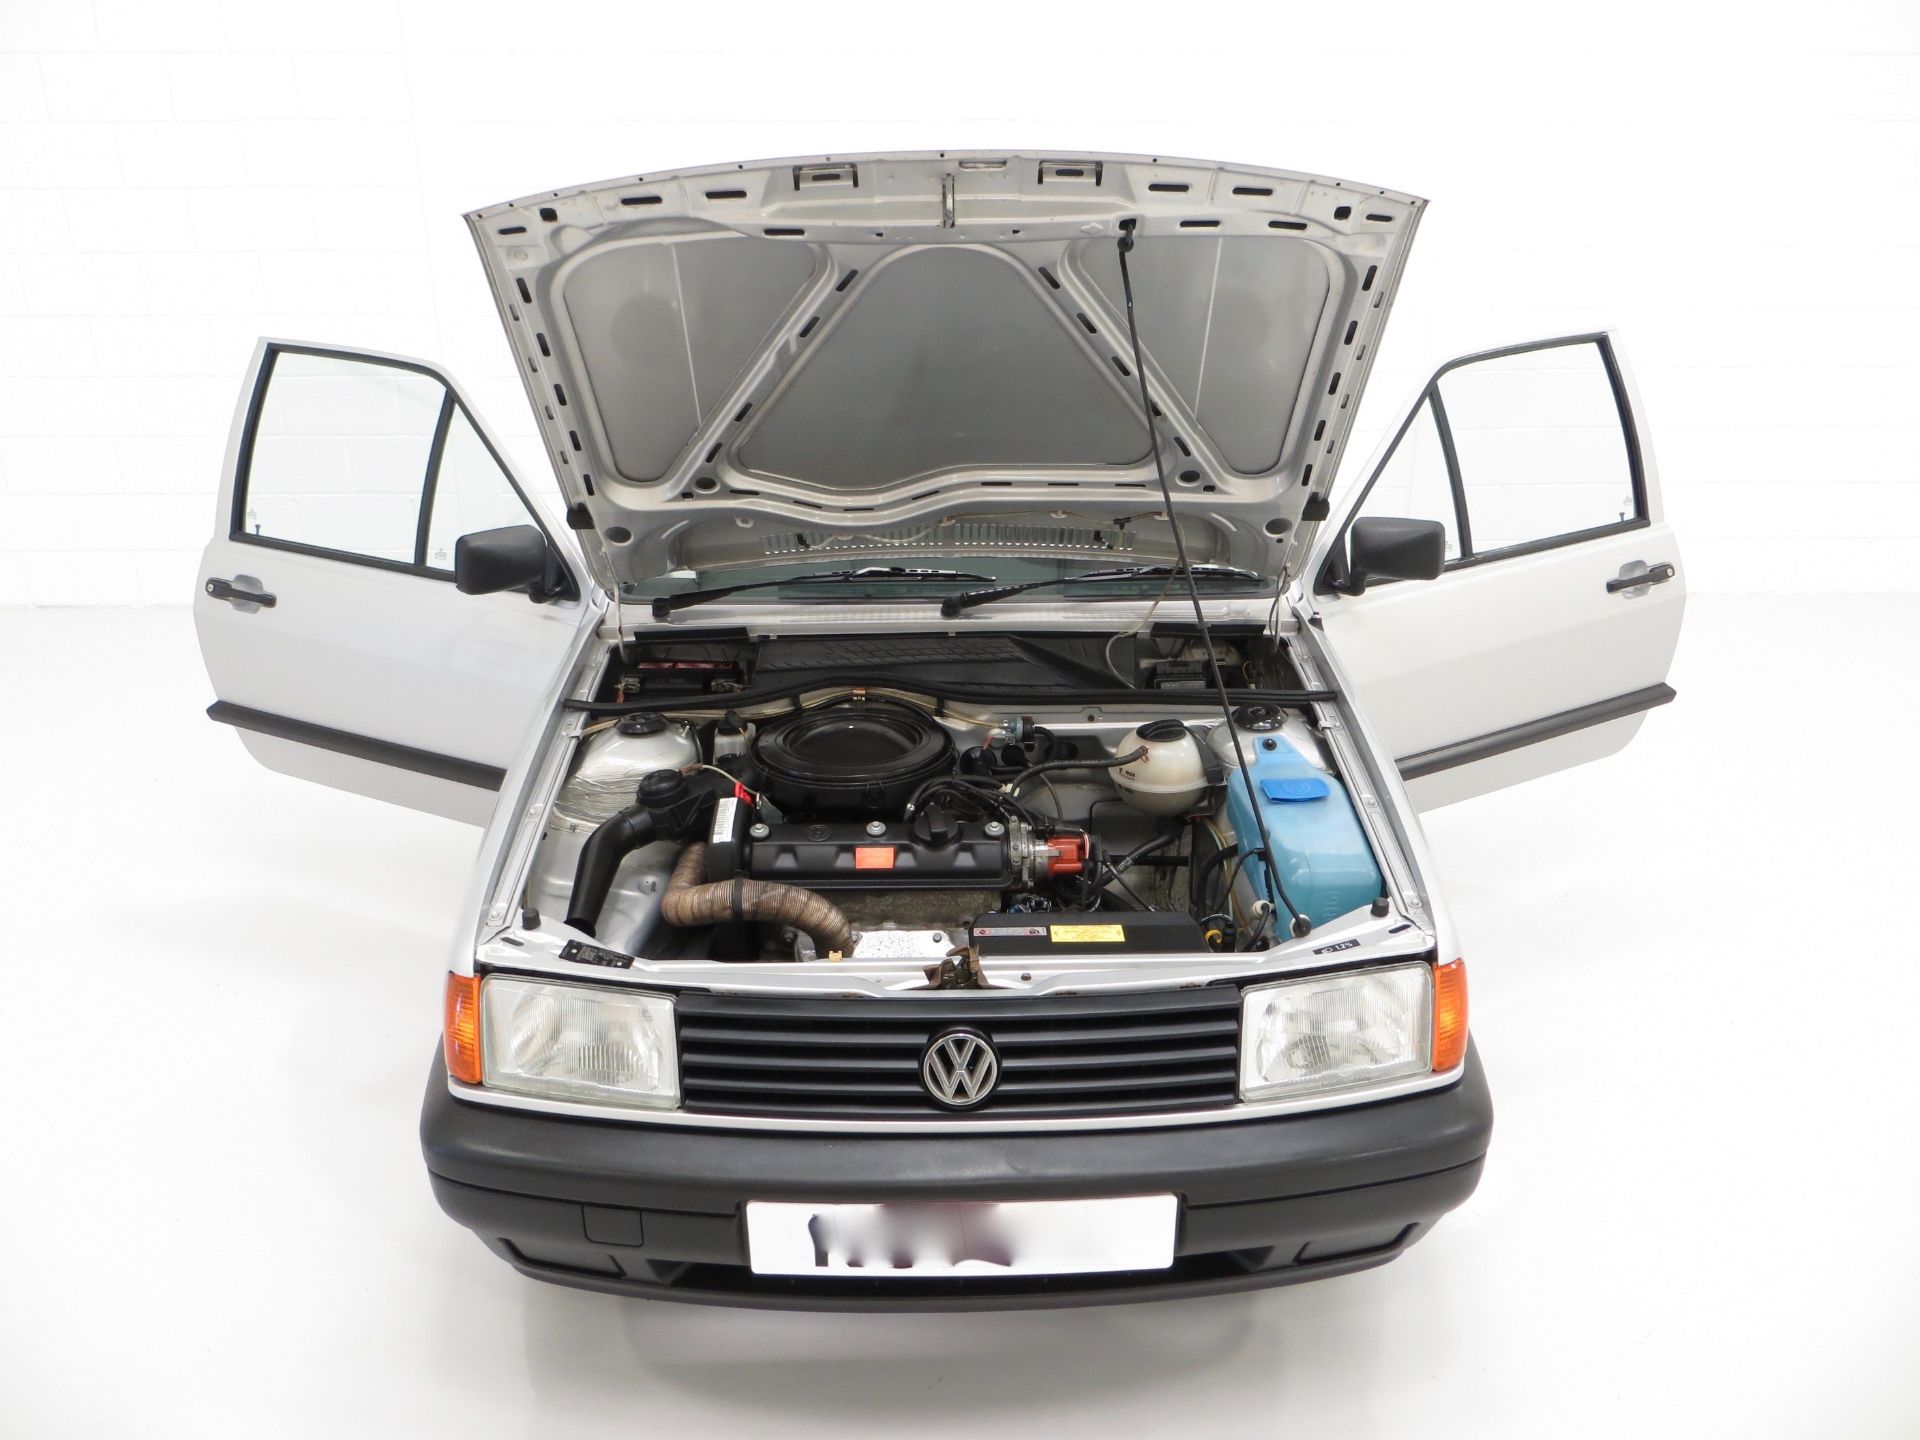 1992 Volkswagen Polo Mk2F Genesis - Image 50 of 86